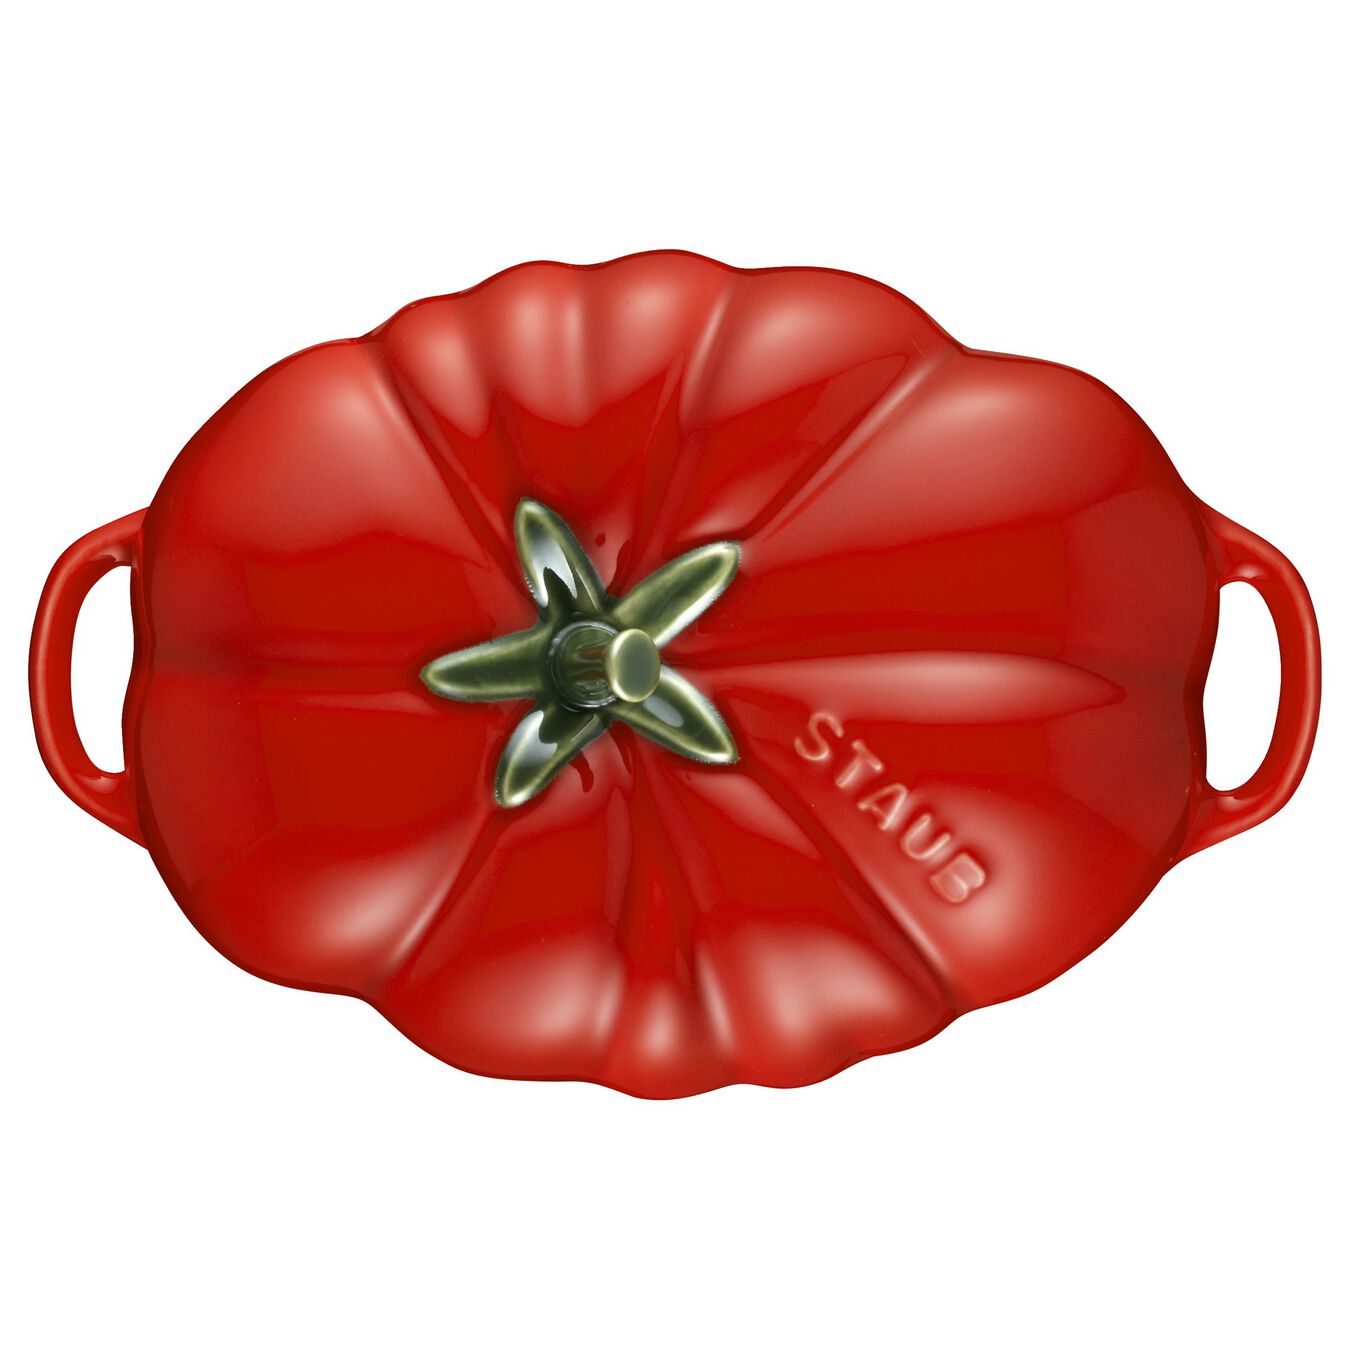 Cocotte 16 cm, tomato, Cereza, Cerámica,,large 5